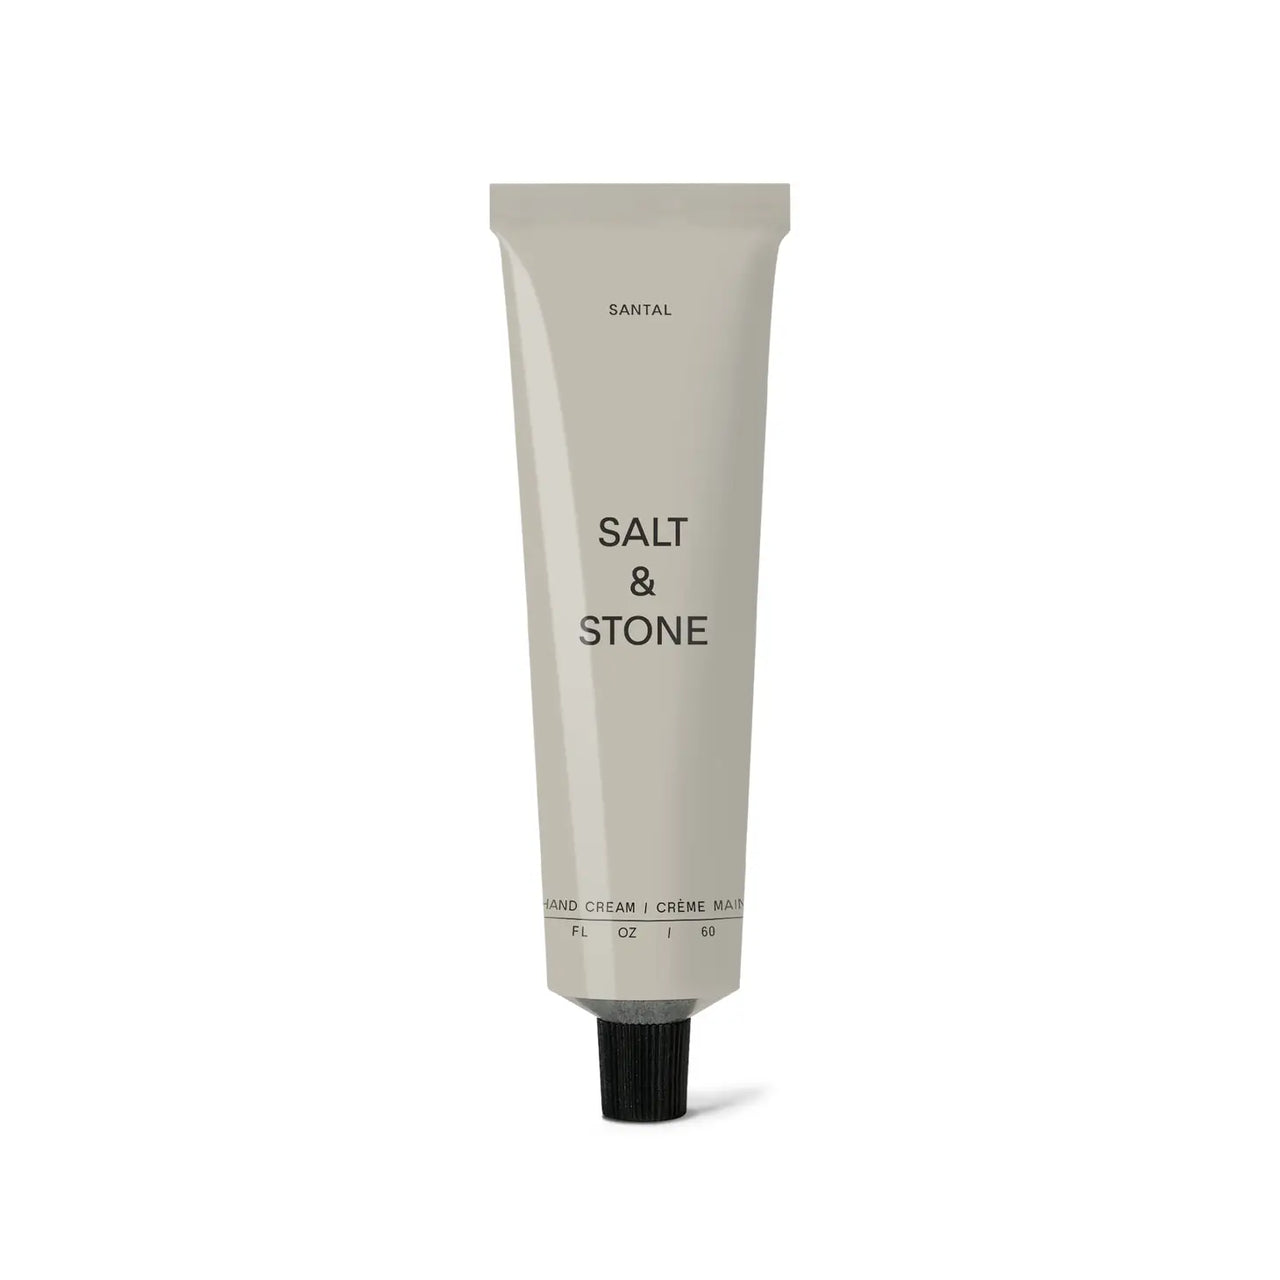 SALT AND STONE HAND CREAM - SANTAL & VETIVER